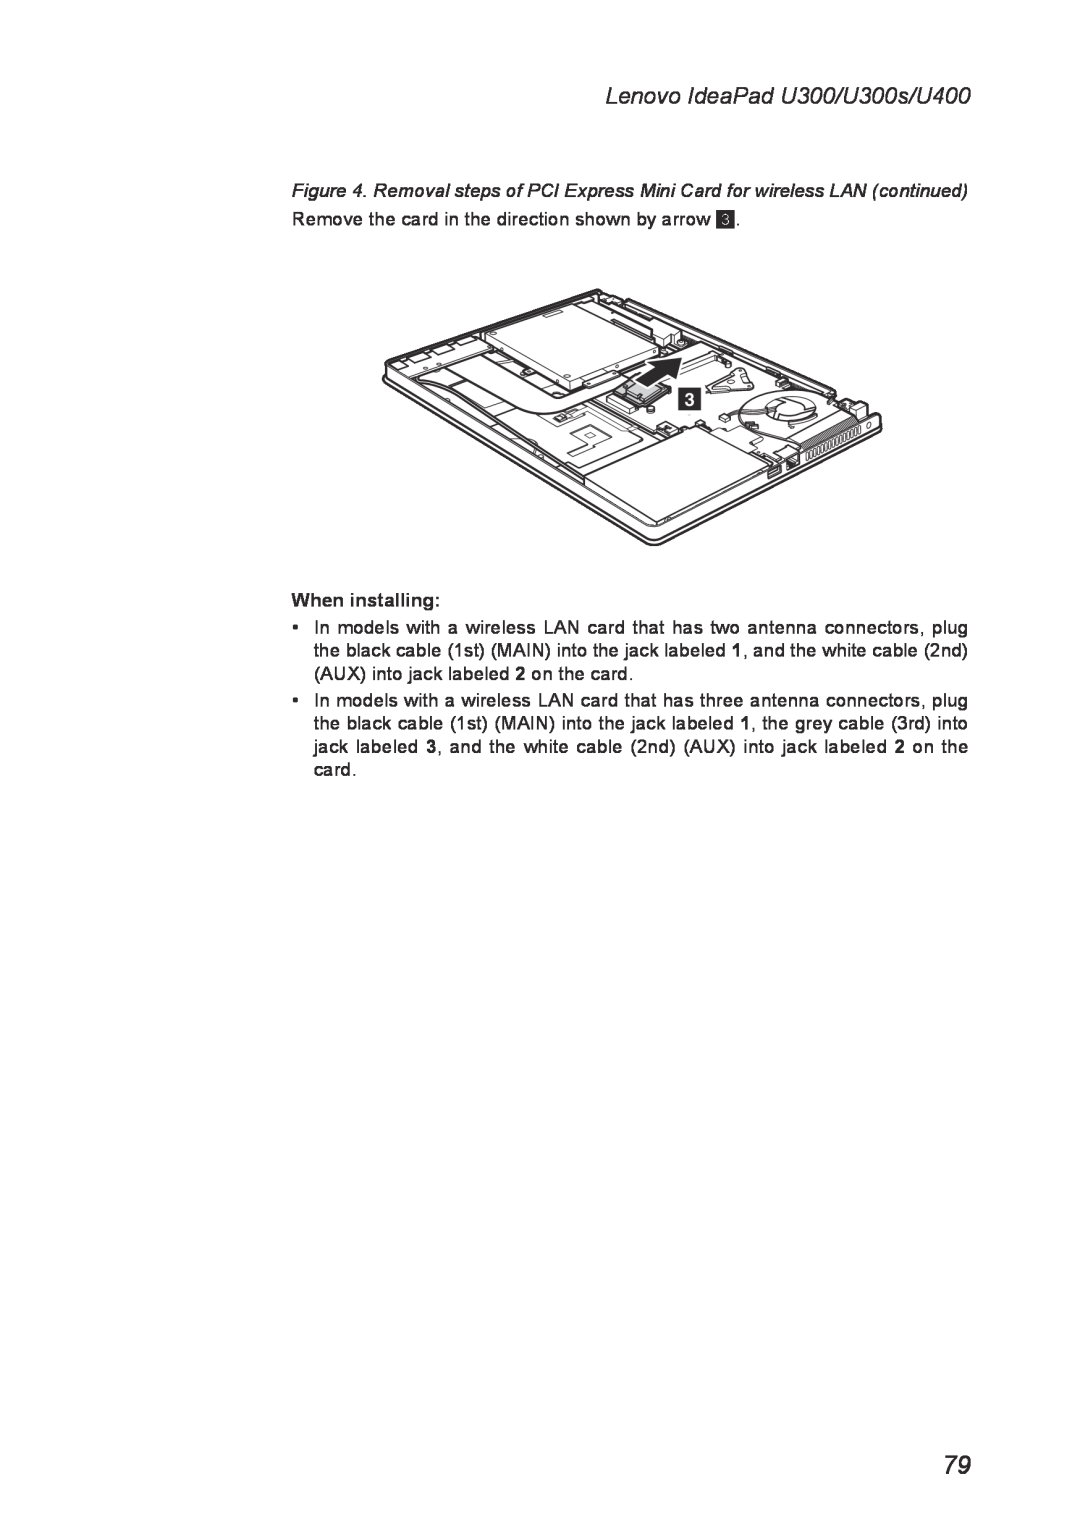 Lenovo U300S manual Lenovo IdeaPad U300/U300s/U400, When installing 